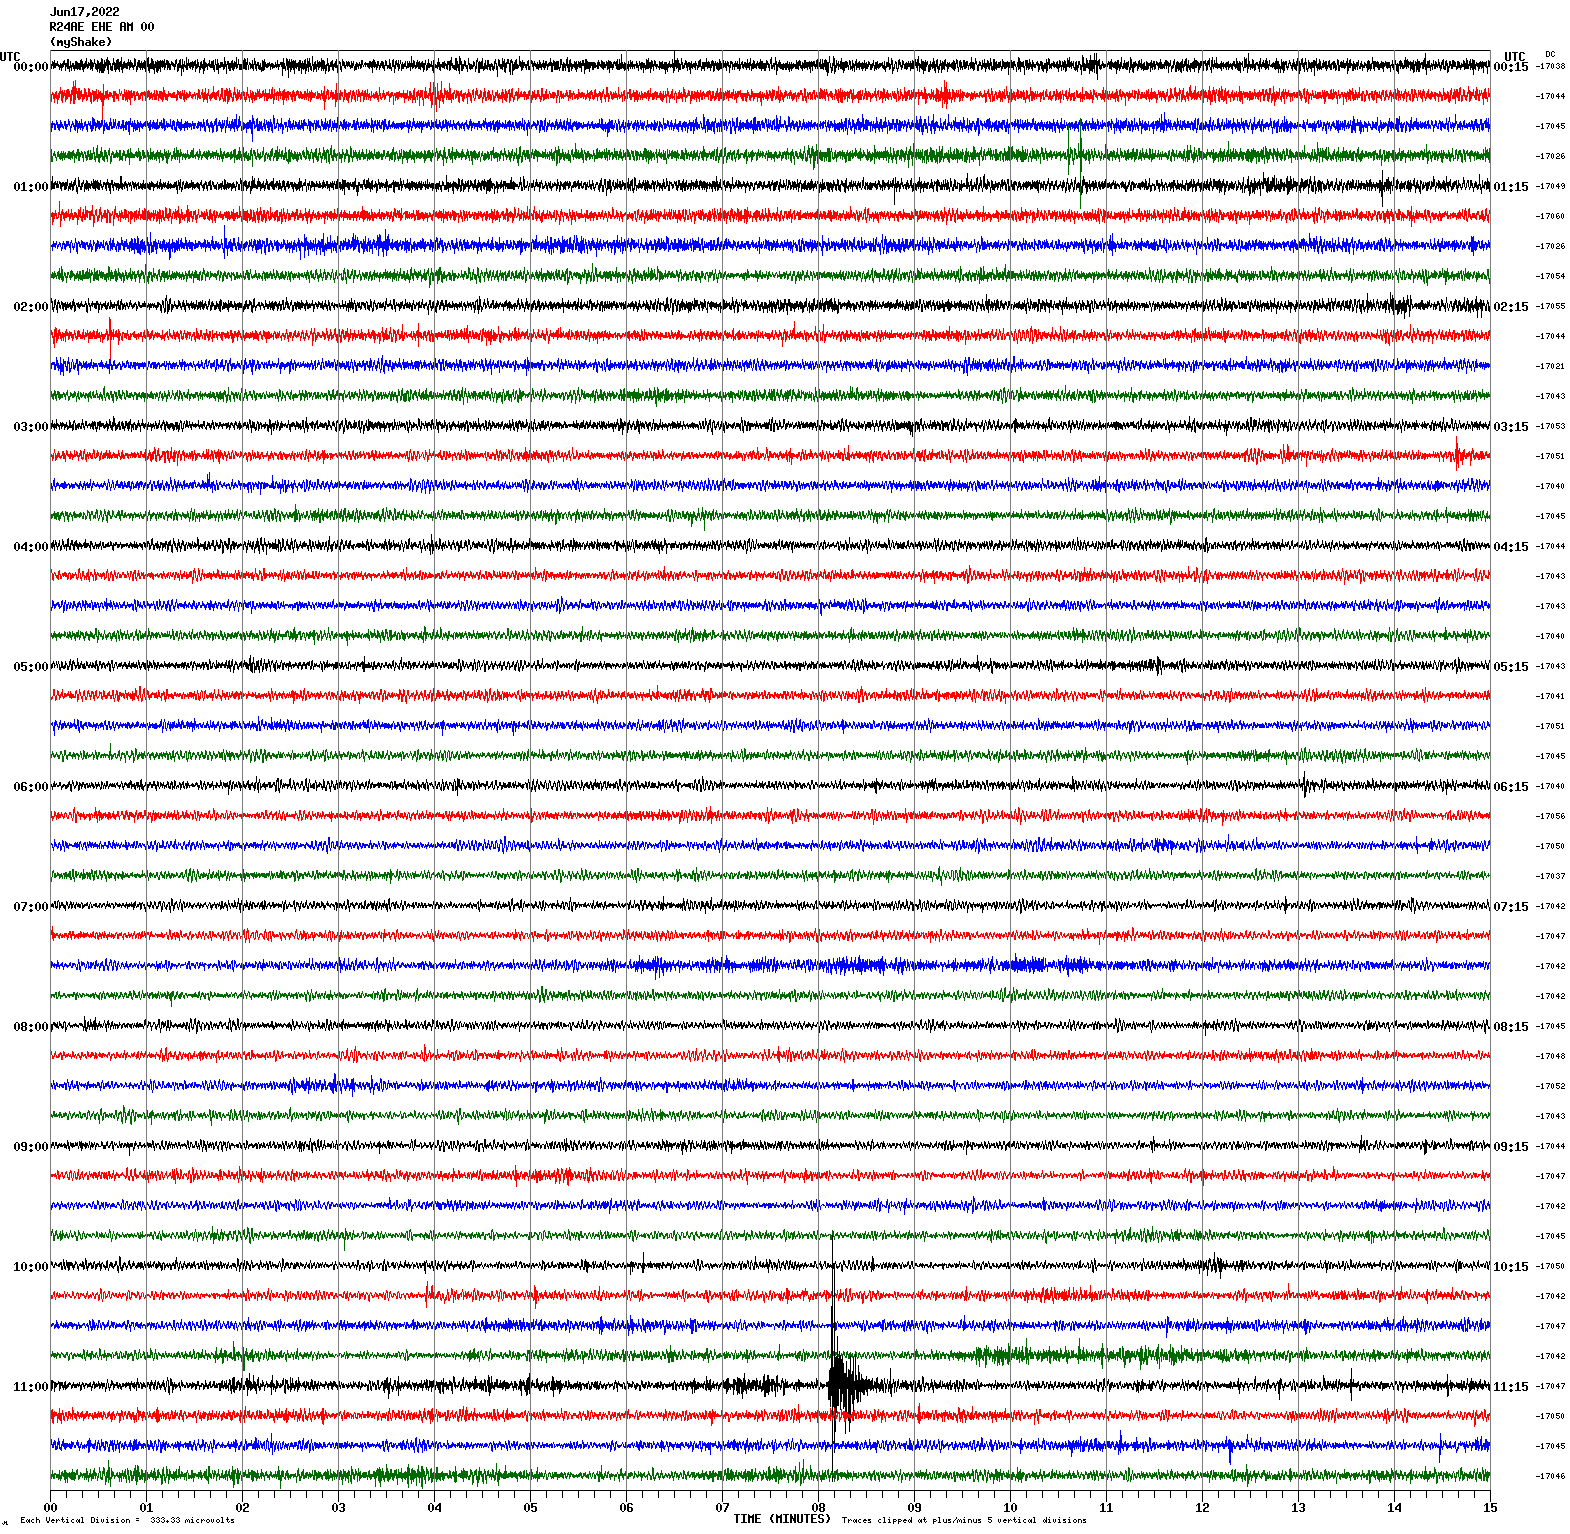 /seismic-data/R24AE/R24AE_EHE_AM_00.2022061700.gif